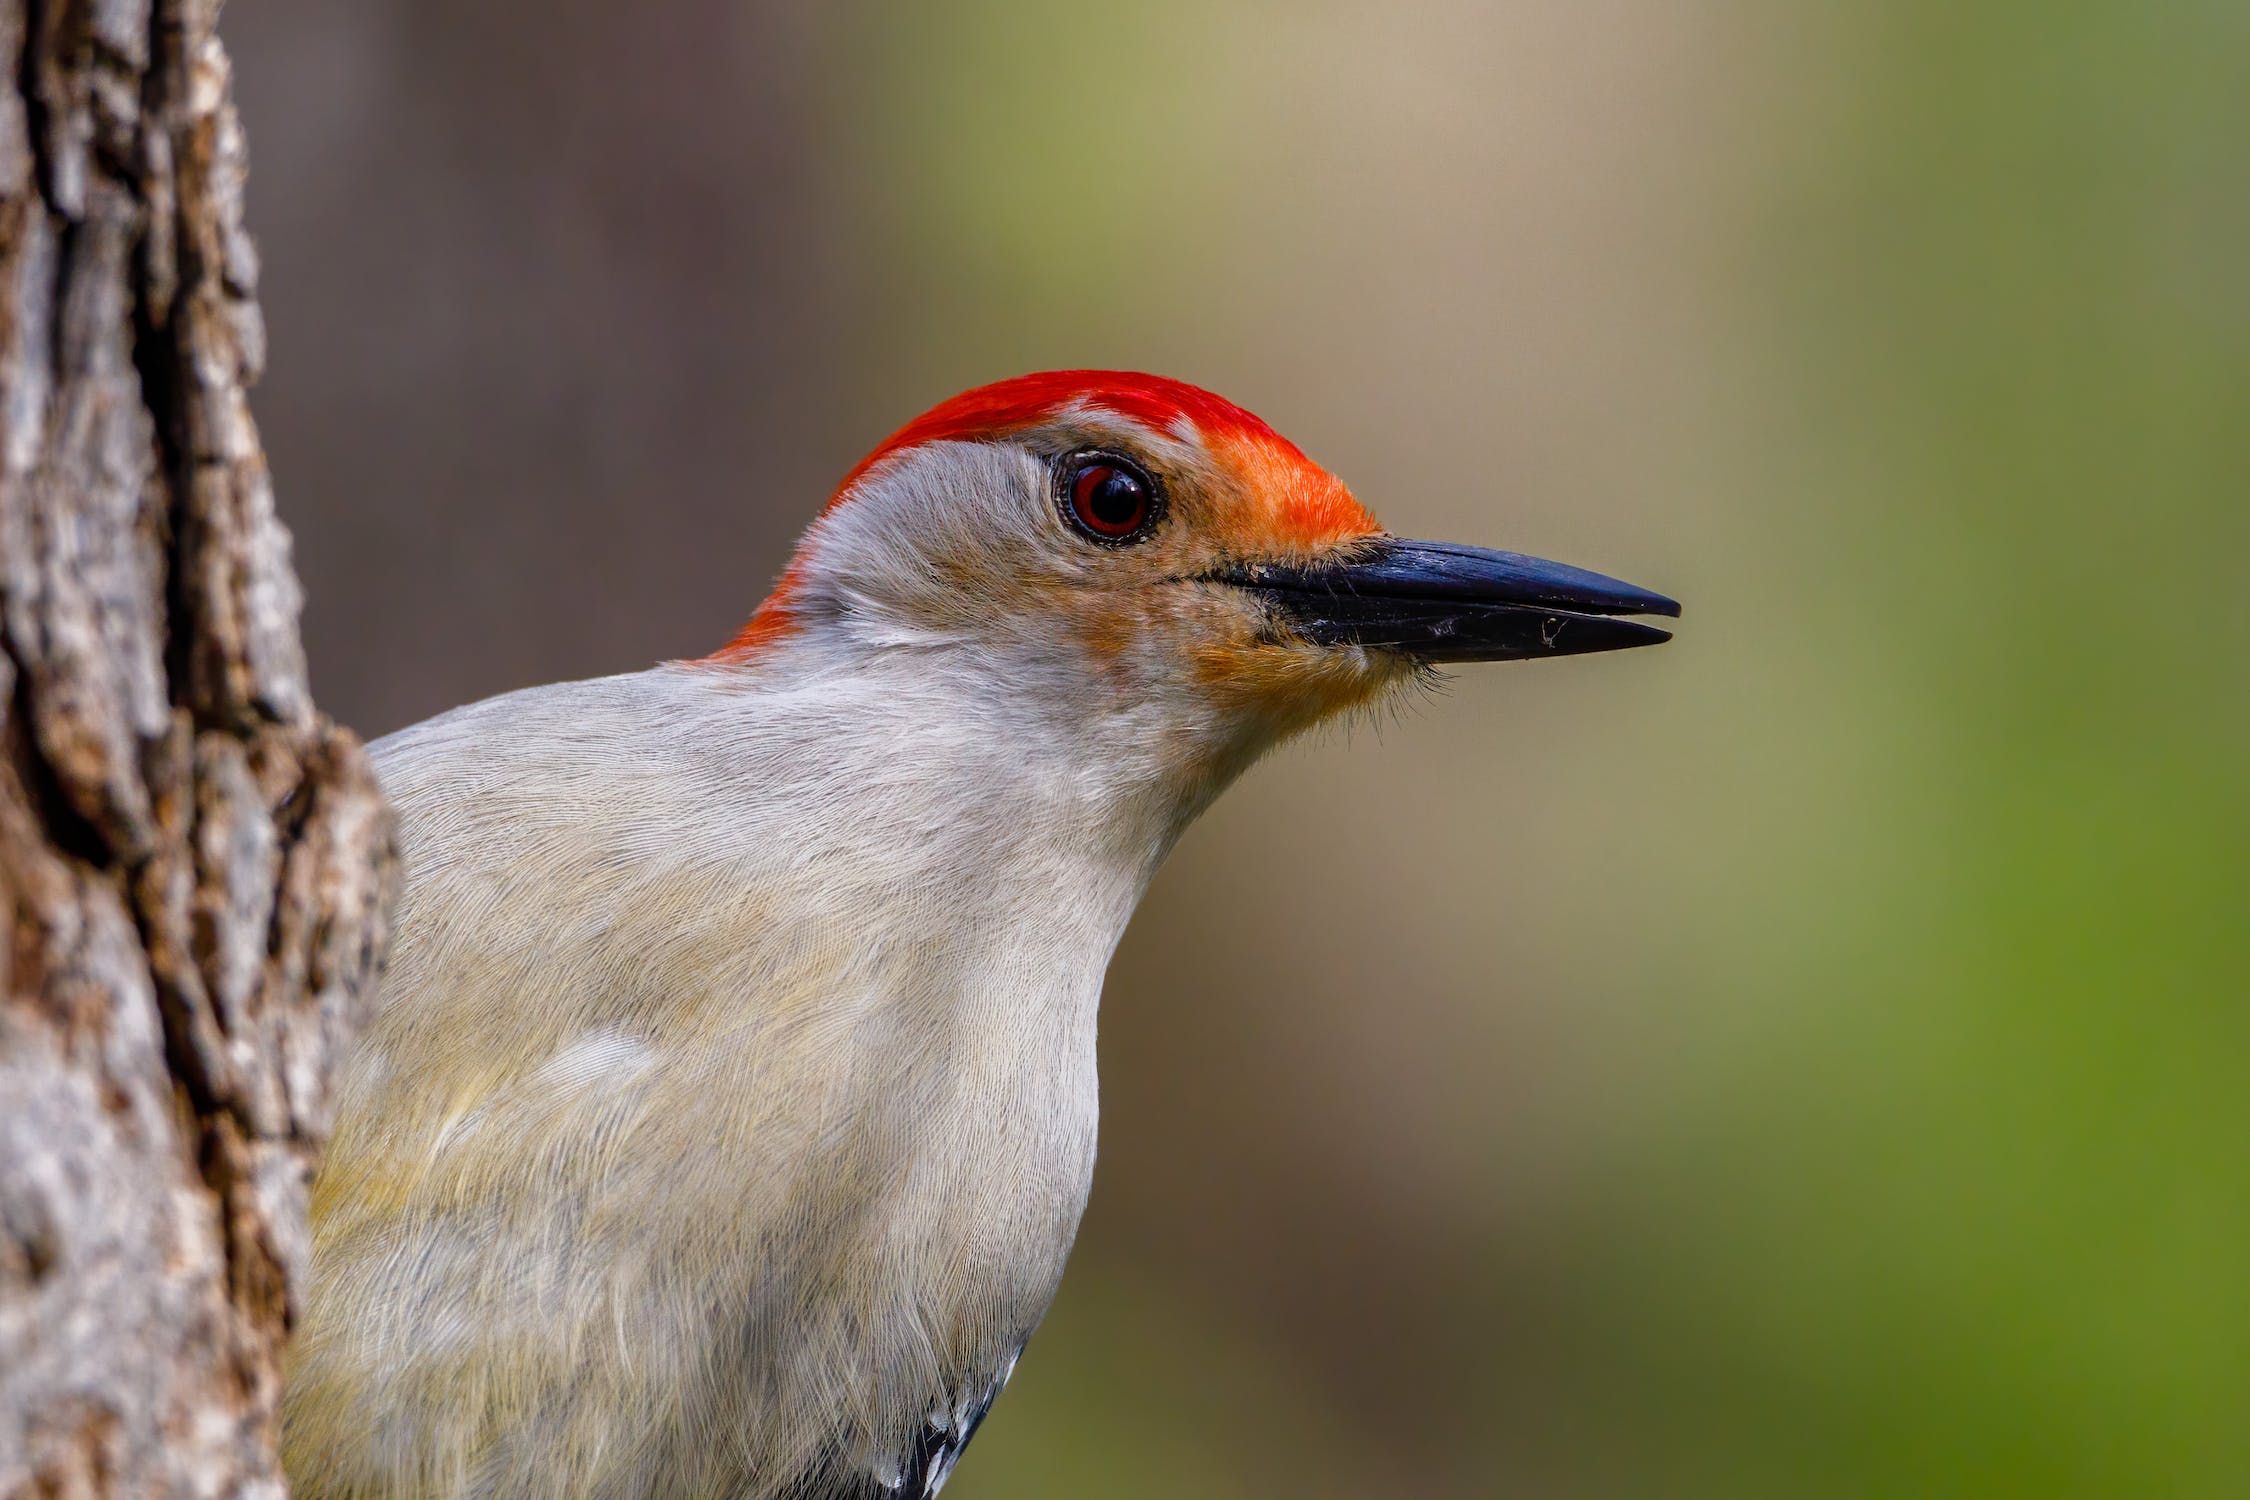 A red-bellied woodpecker on a tree